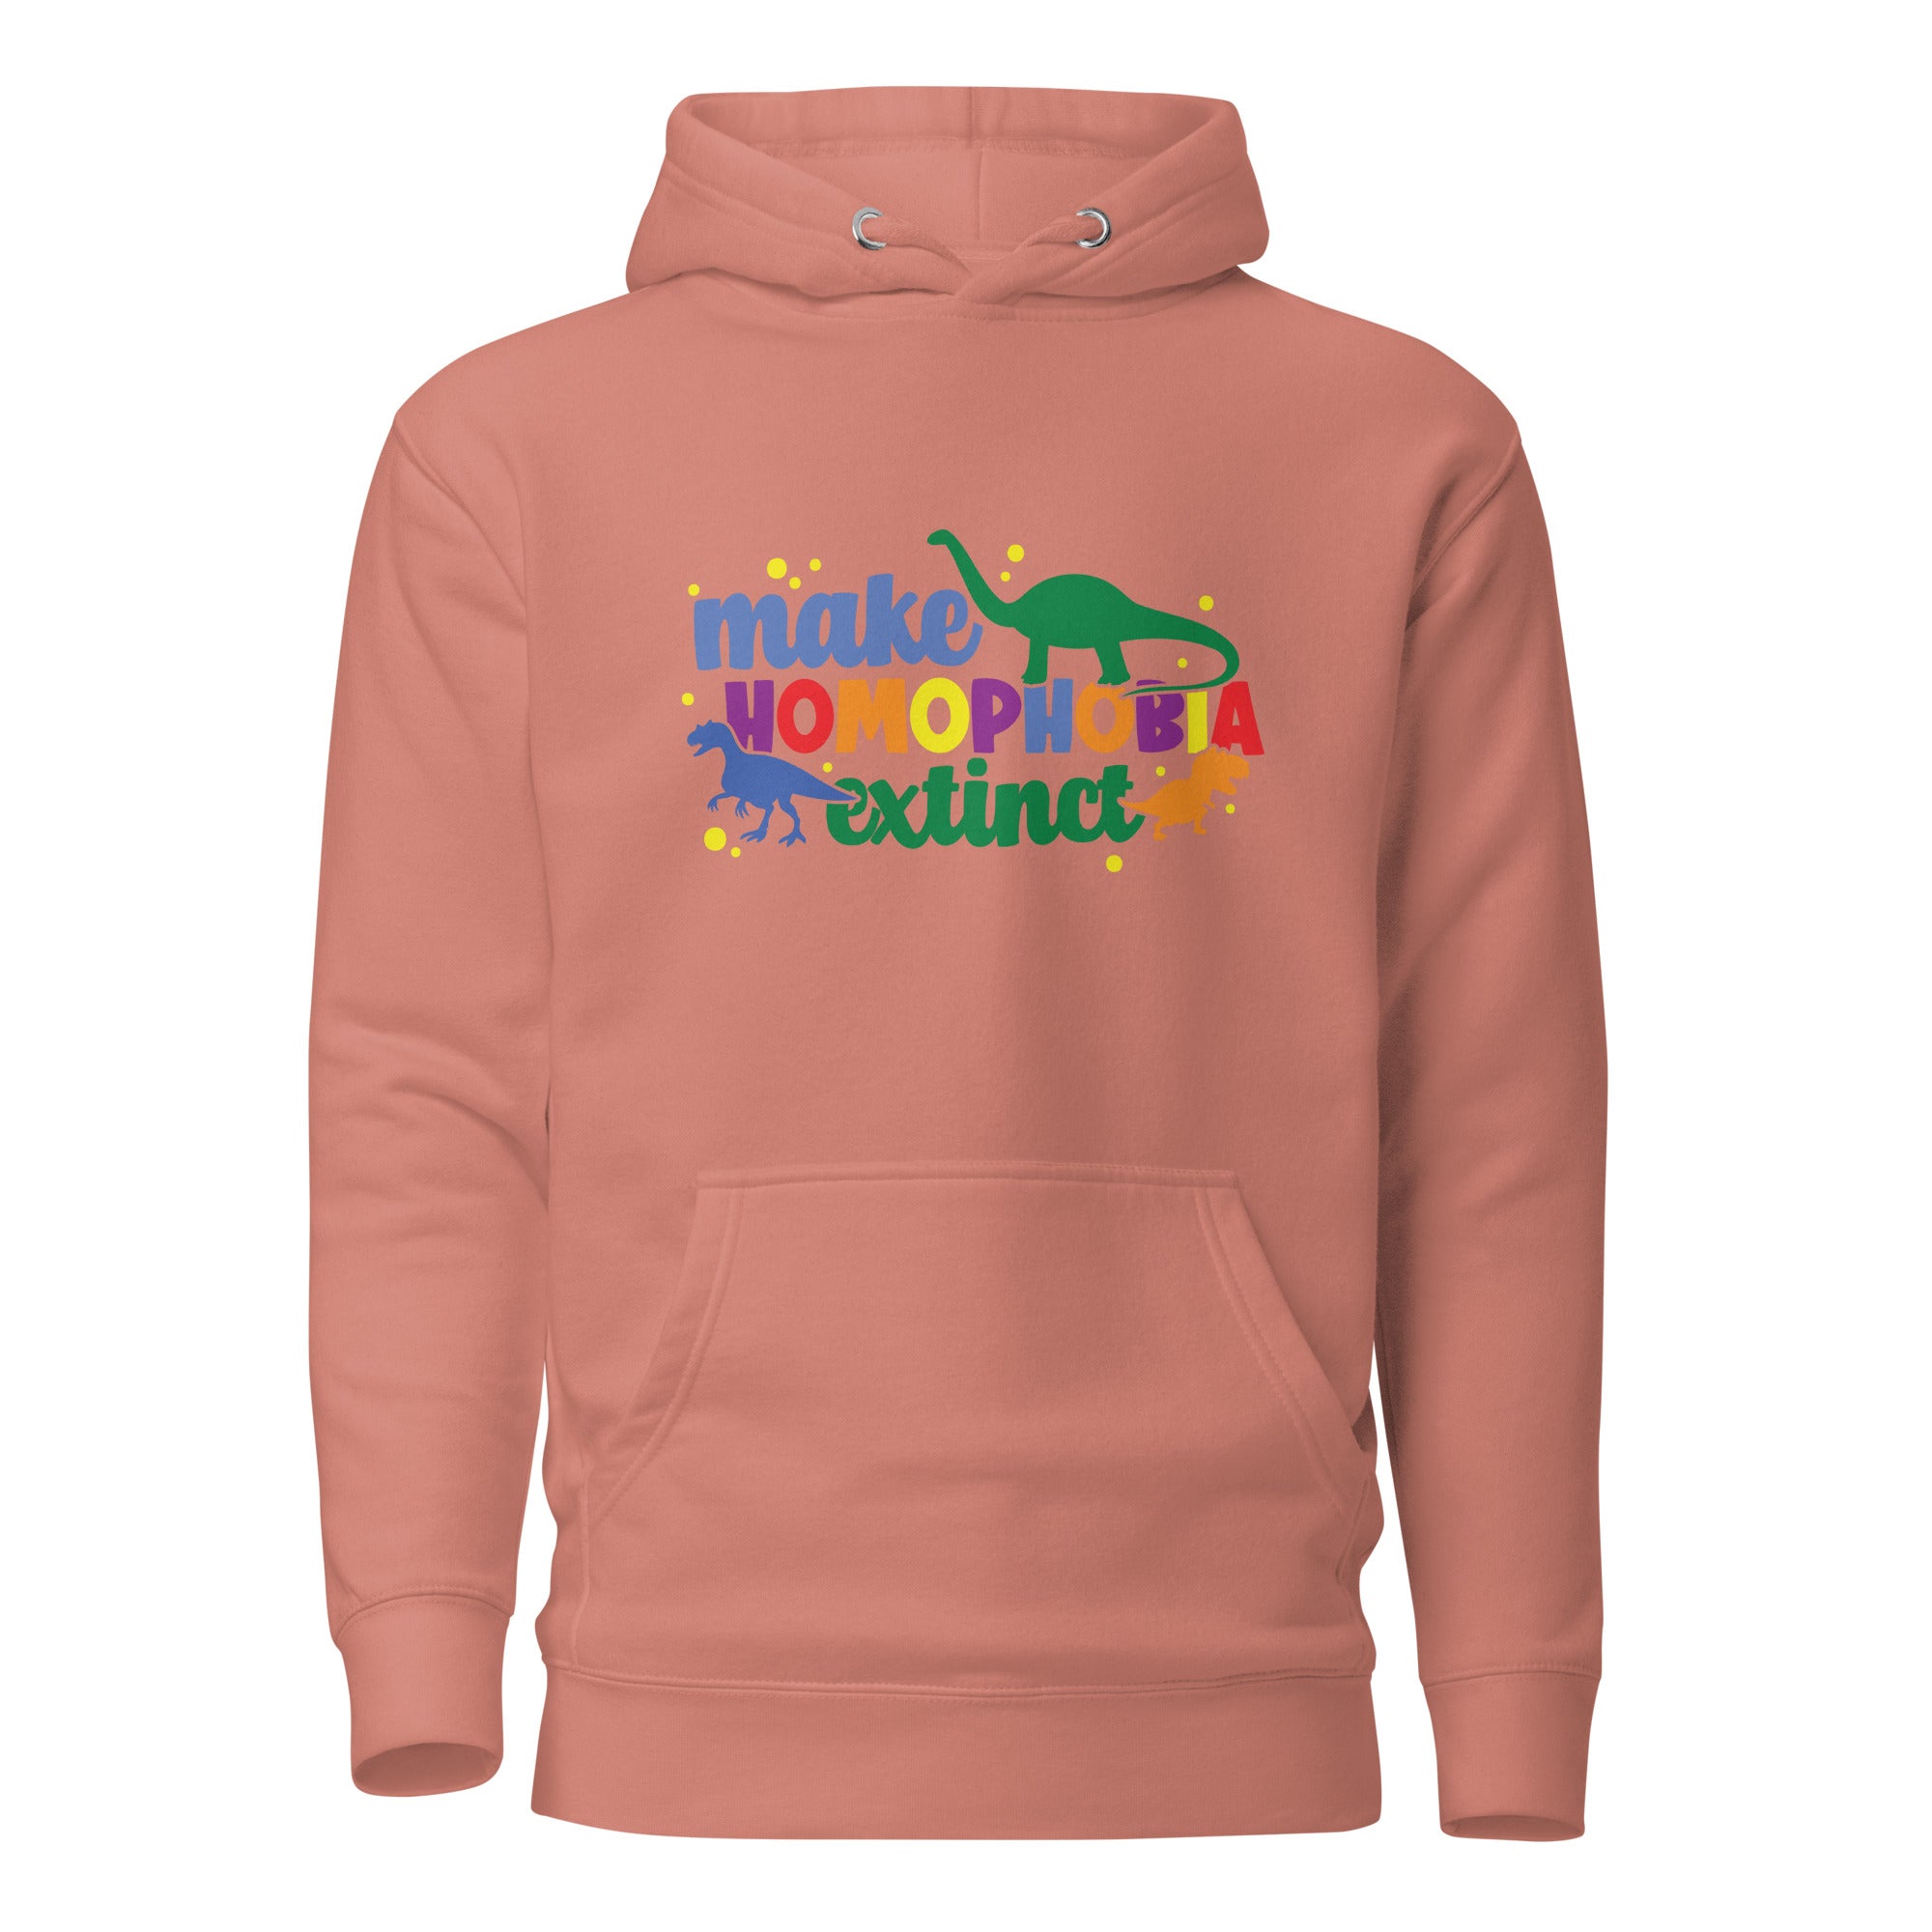 Unisex Hoodie- Make homophobia extinct